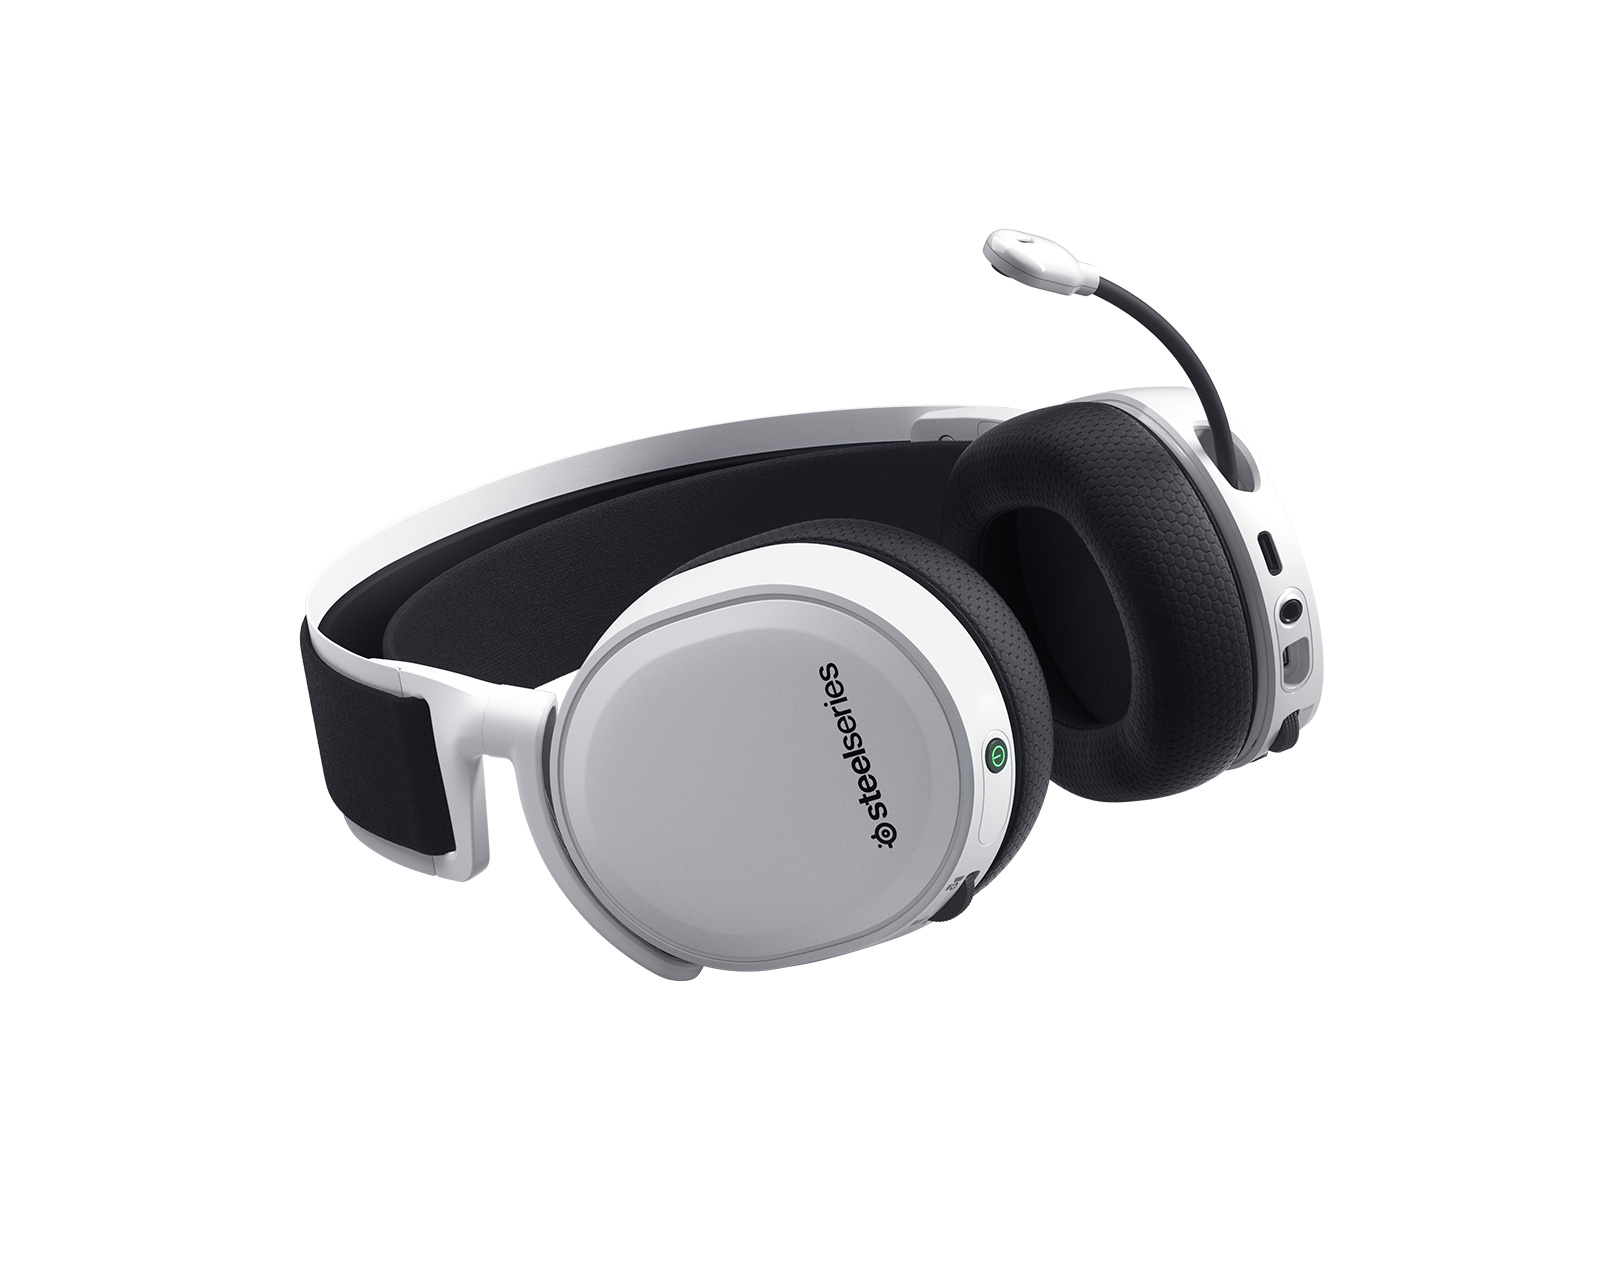 SteelSeries Arctis 7 Plus Wireless Gaming Headset